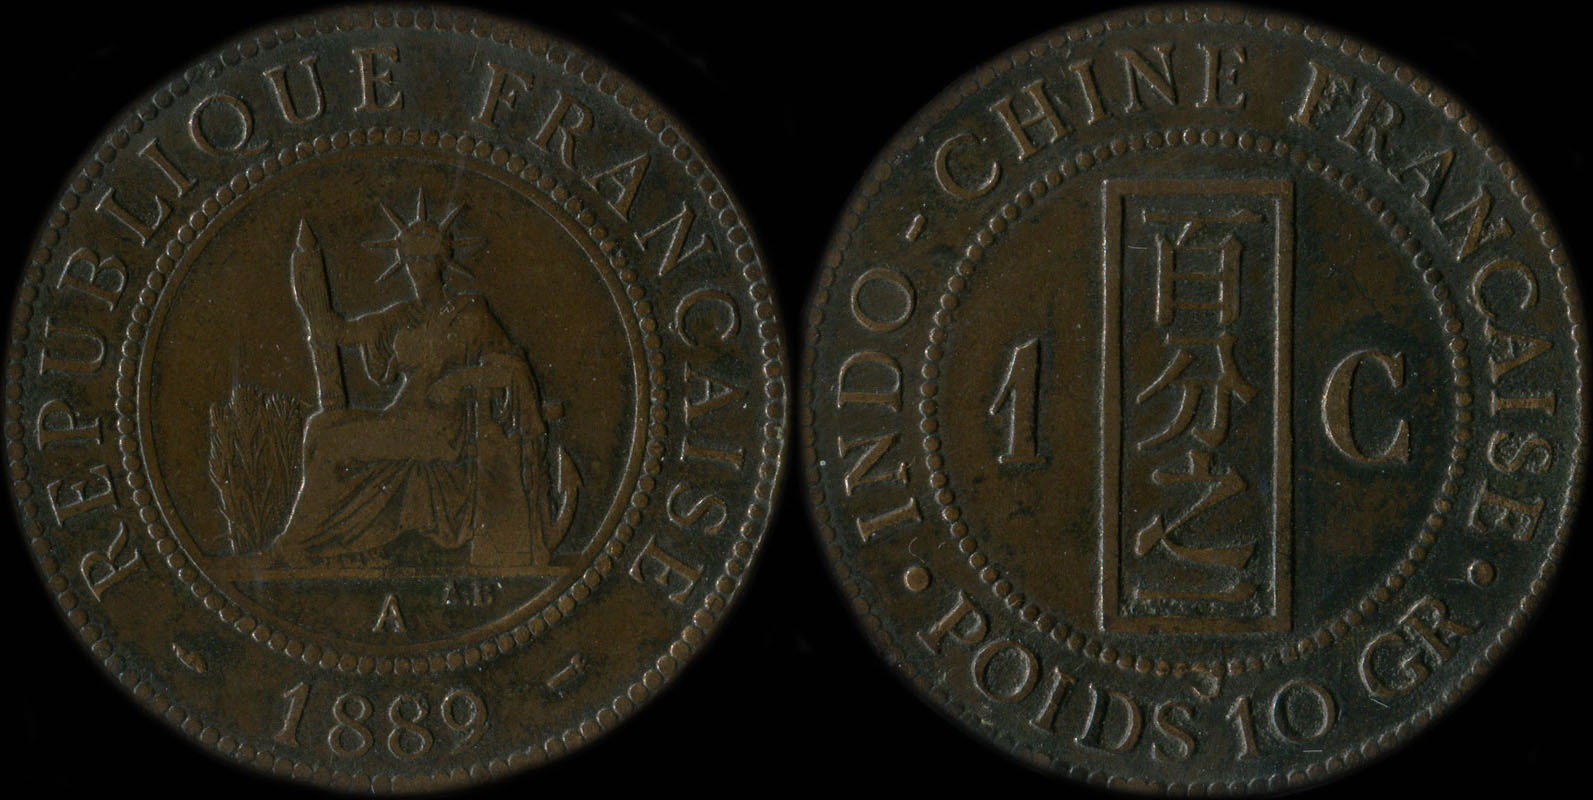 Pice de 1 centime Indochine 1889